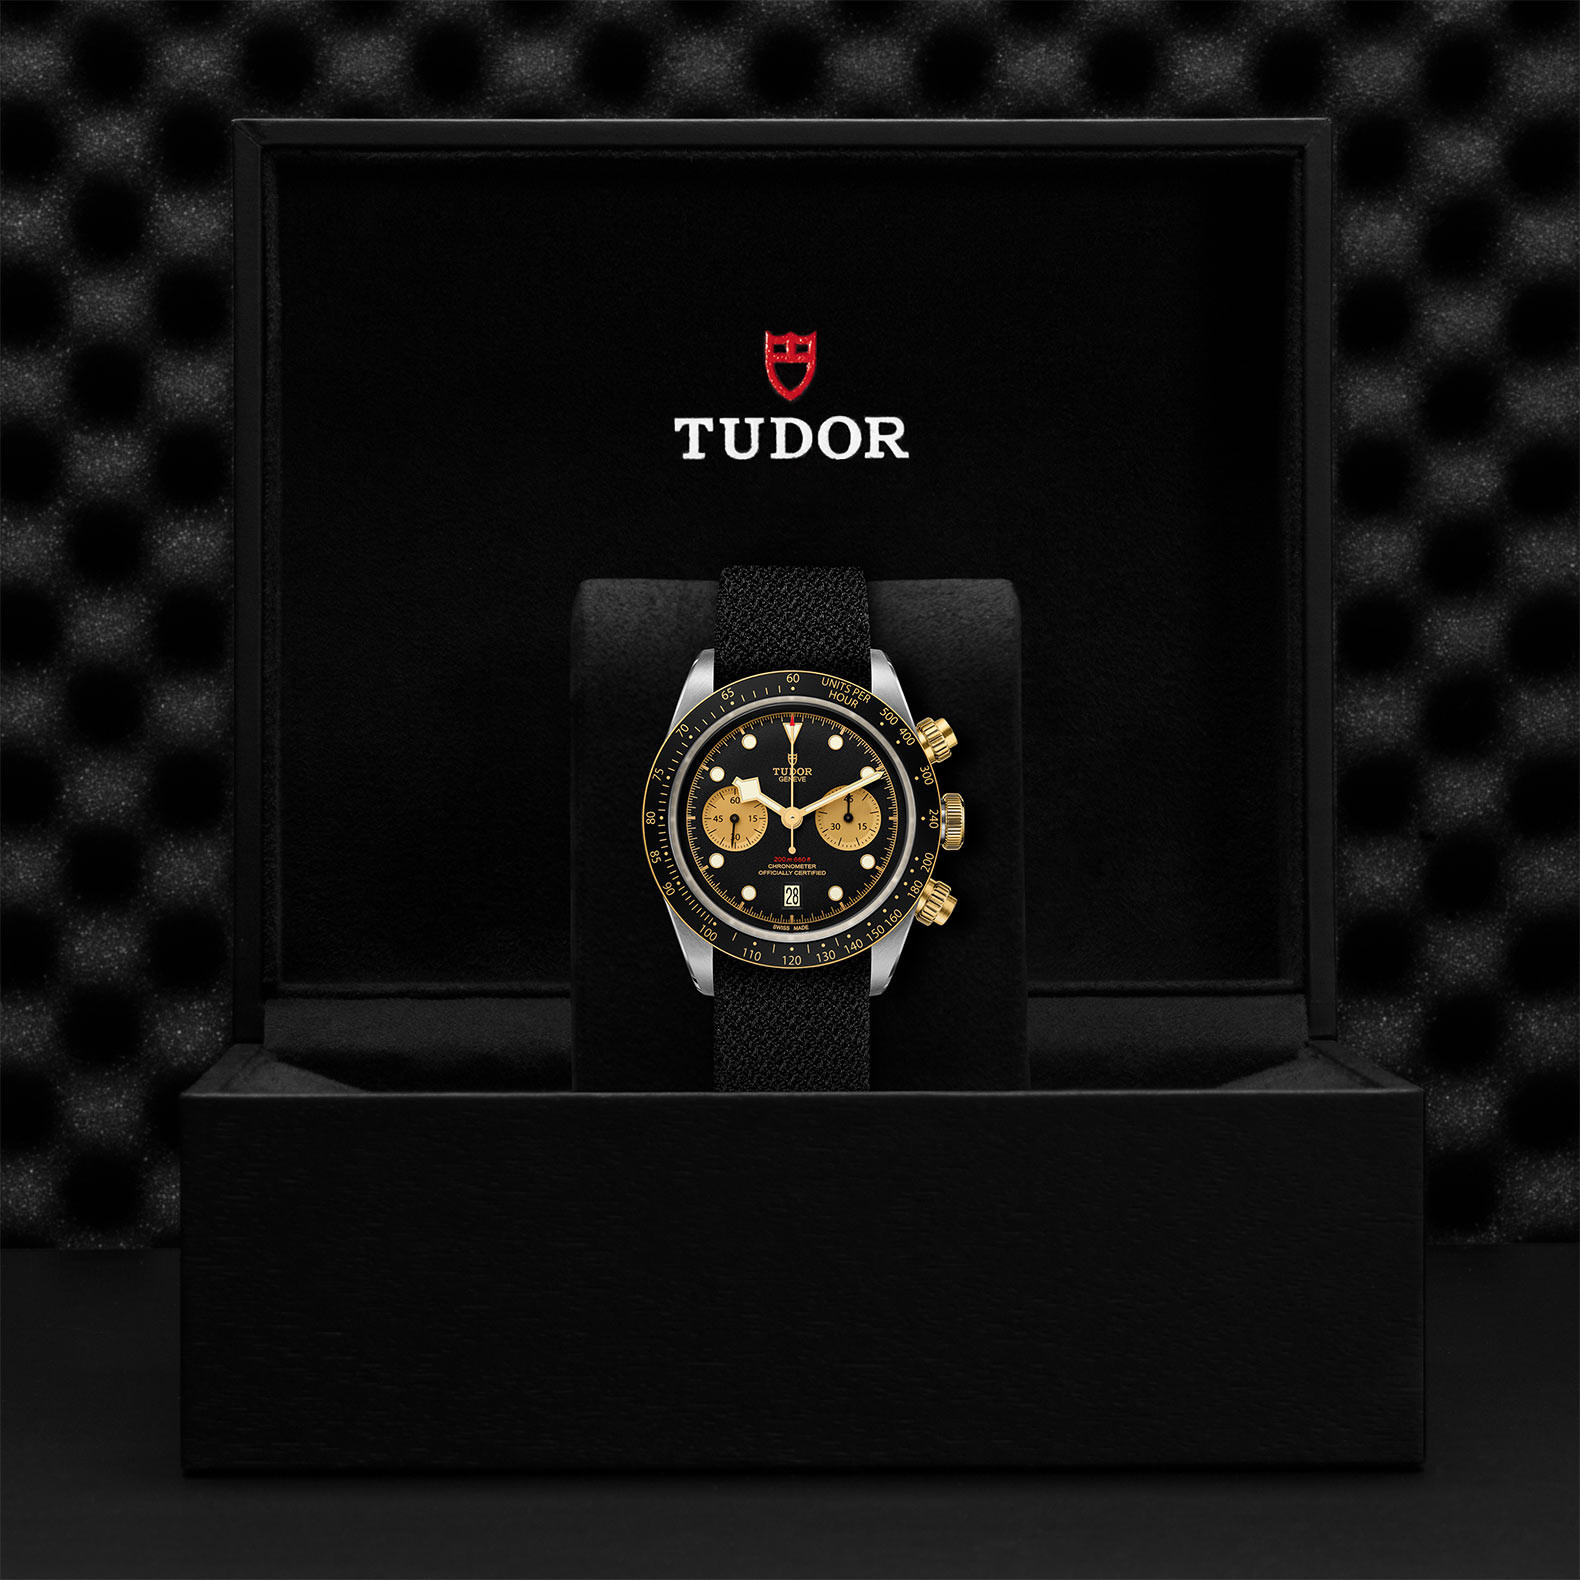 TUDOR Black Bay Heritage Chrono S&G Watch in Presentation Box